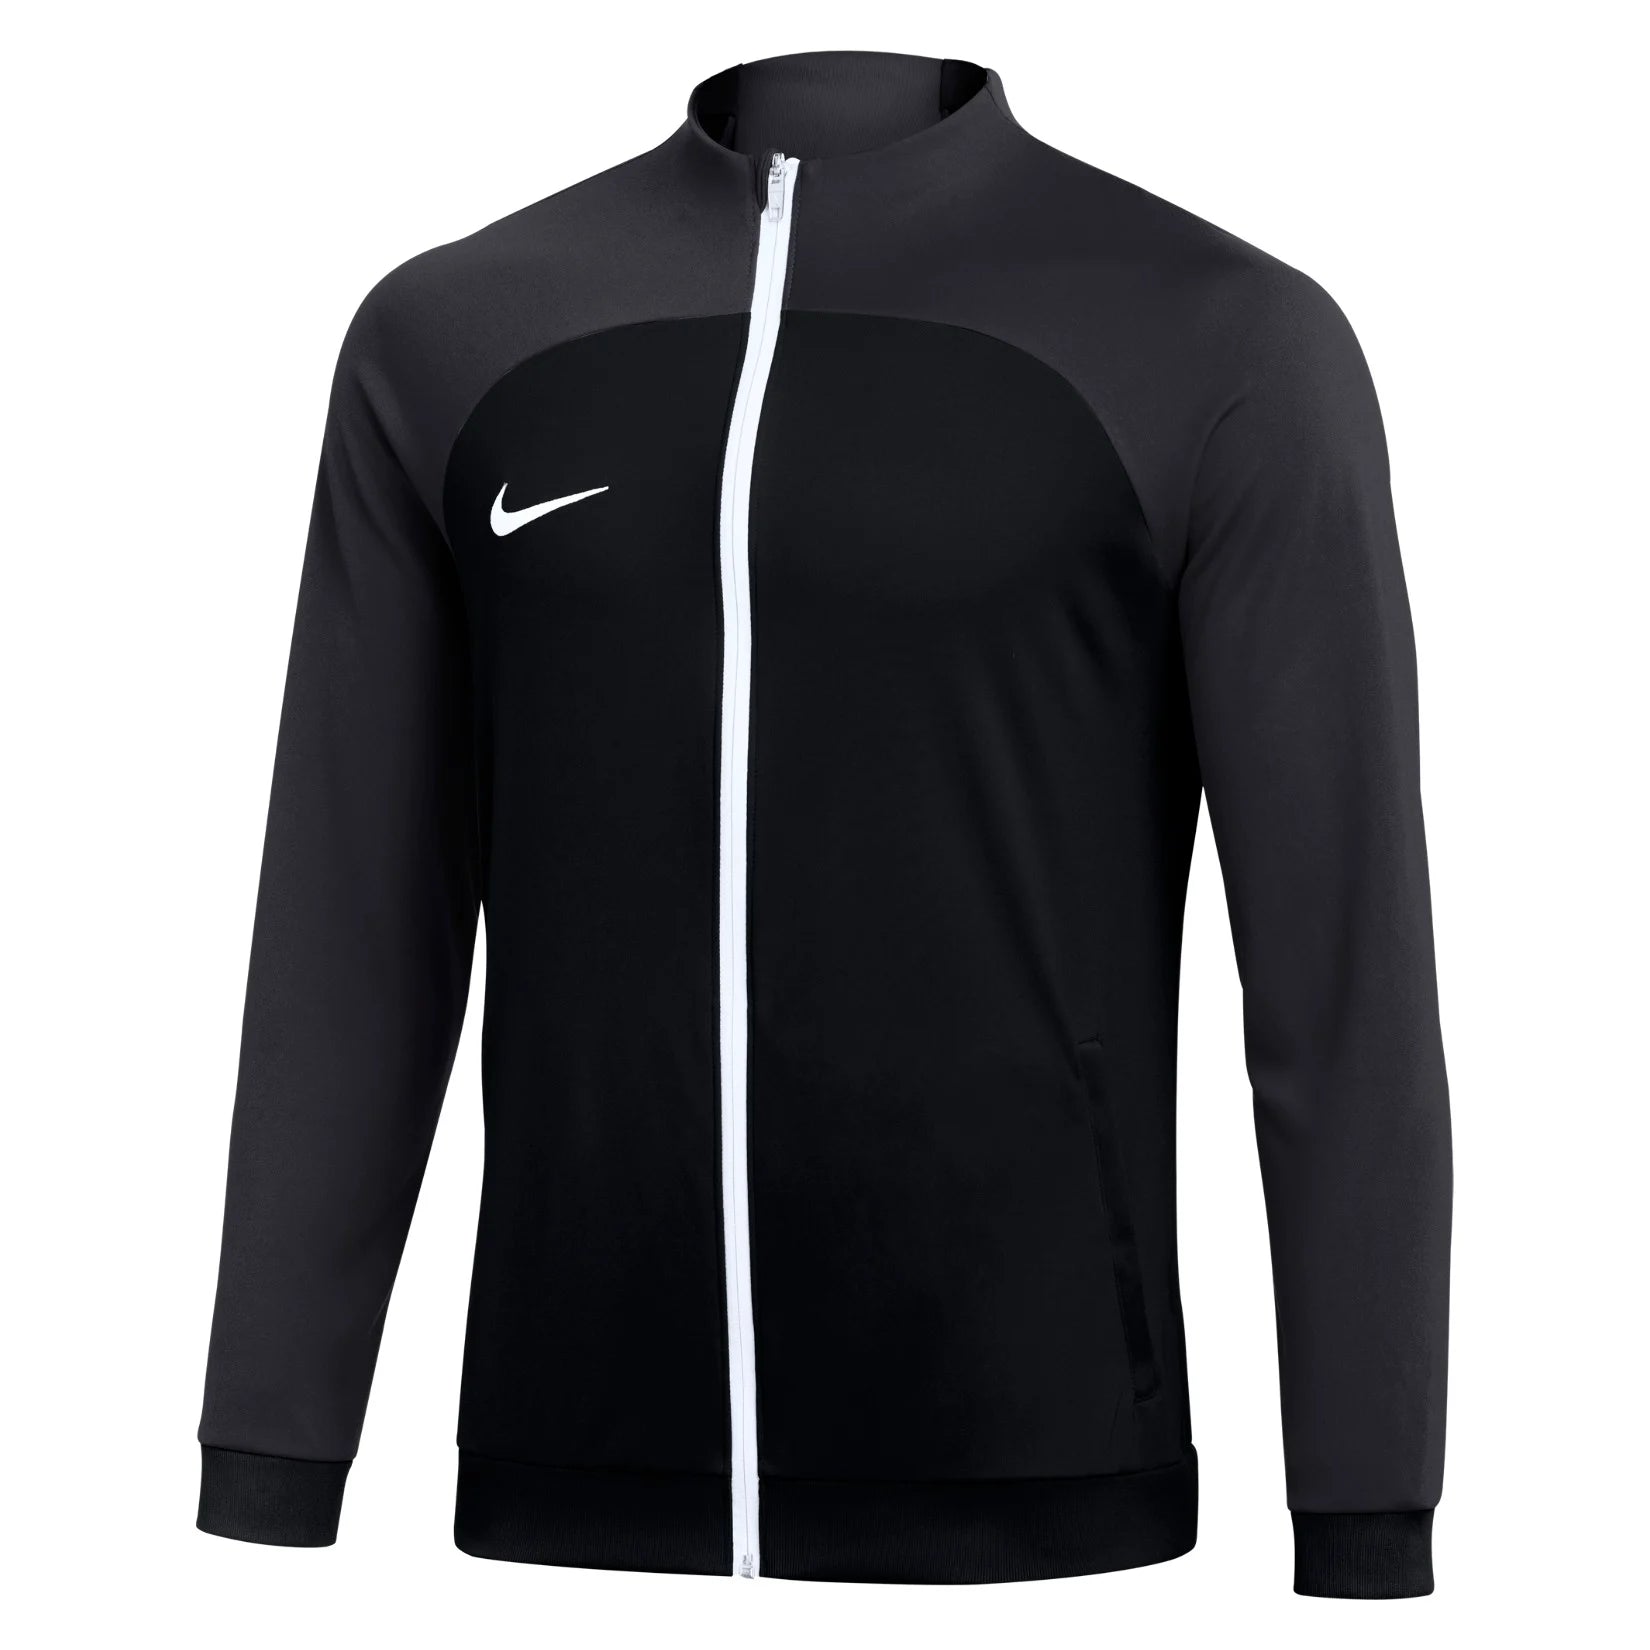 2023/24 Nike Referee Jacket